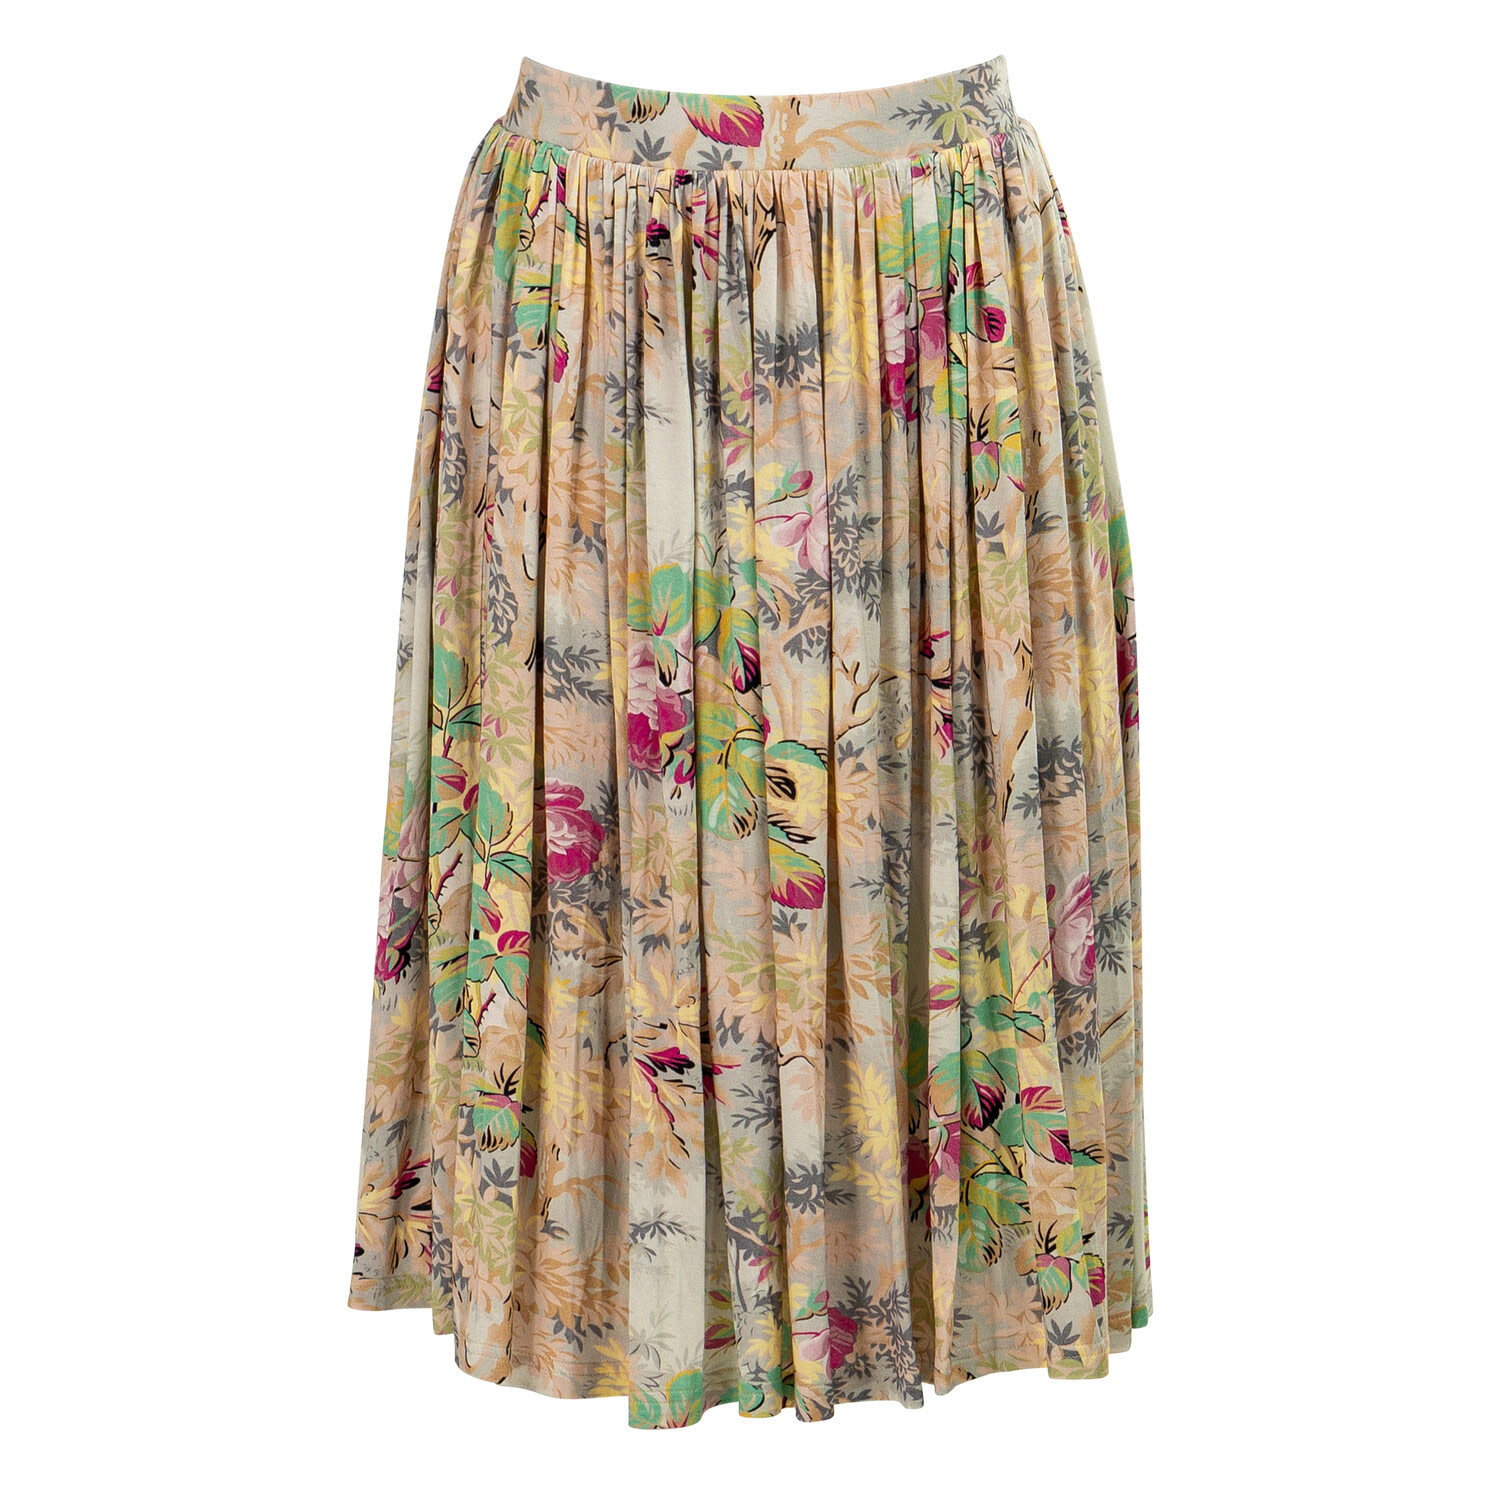 Kristinit Women's Chatterton Skirt Floral In Multi